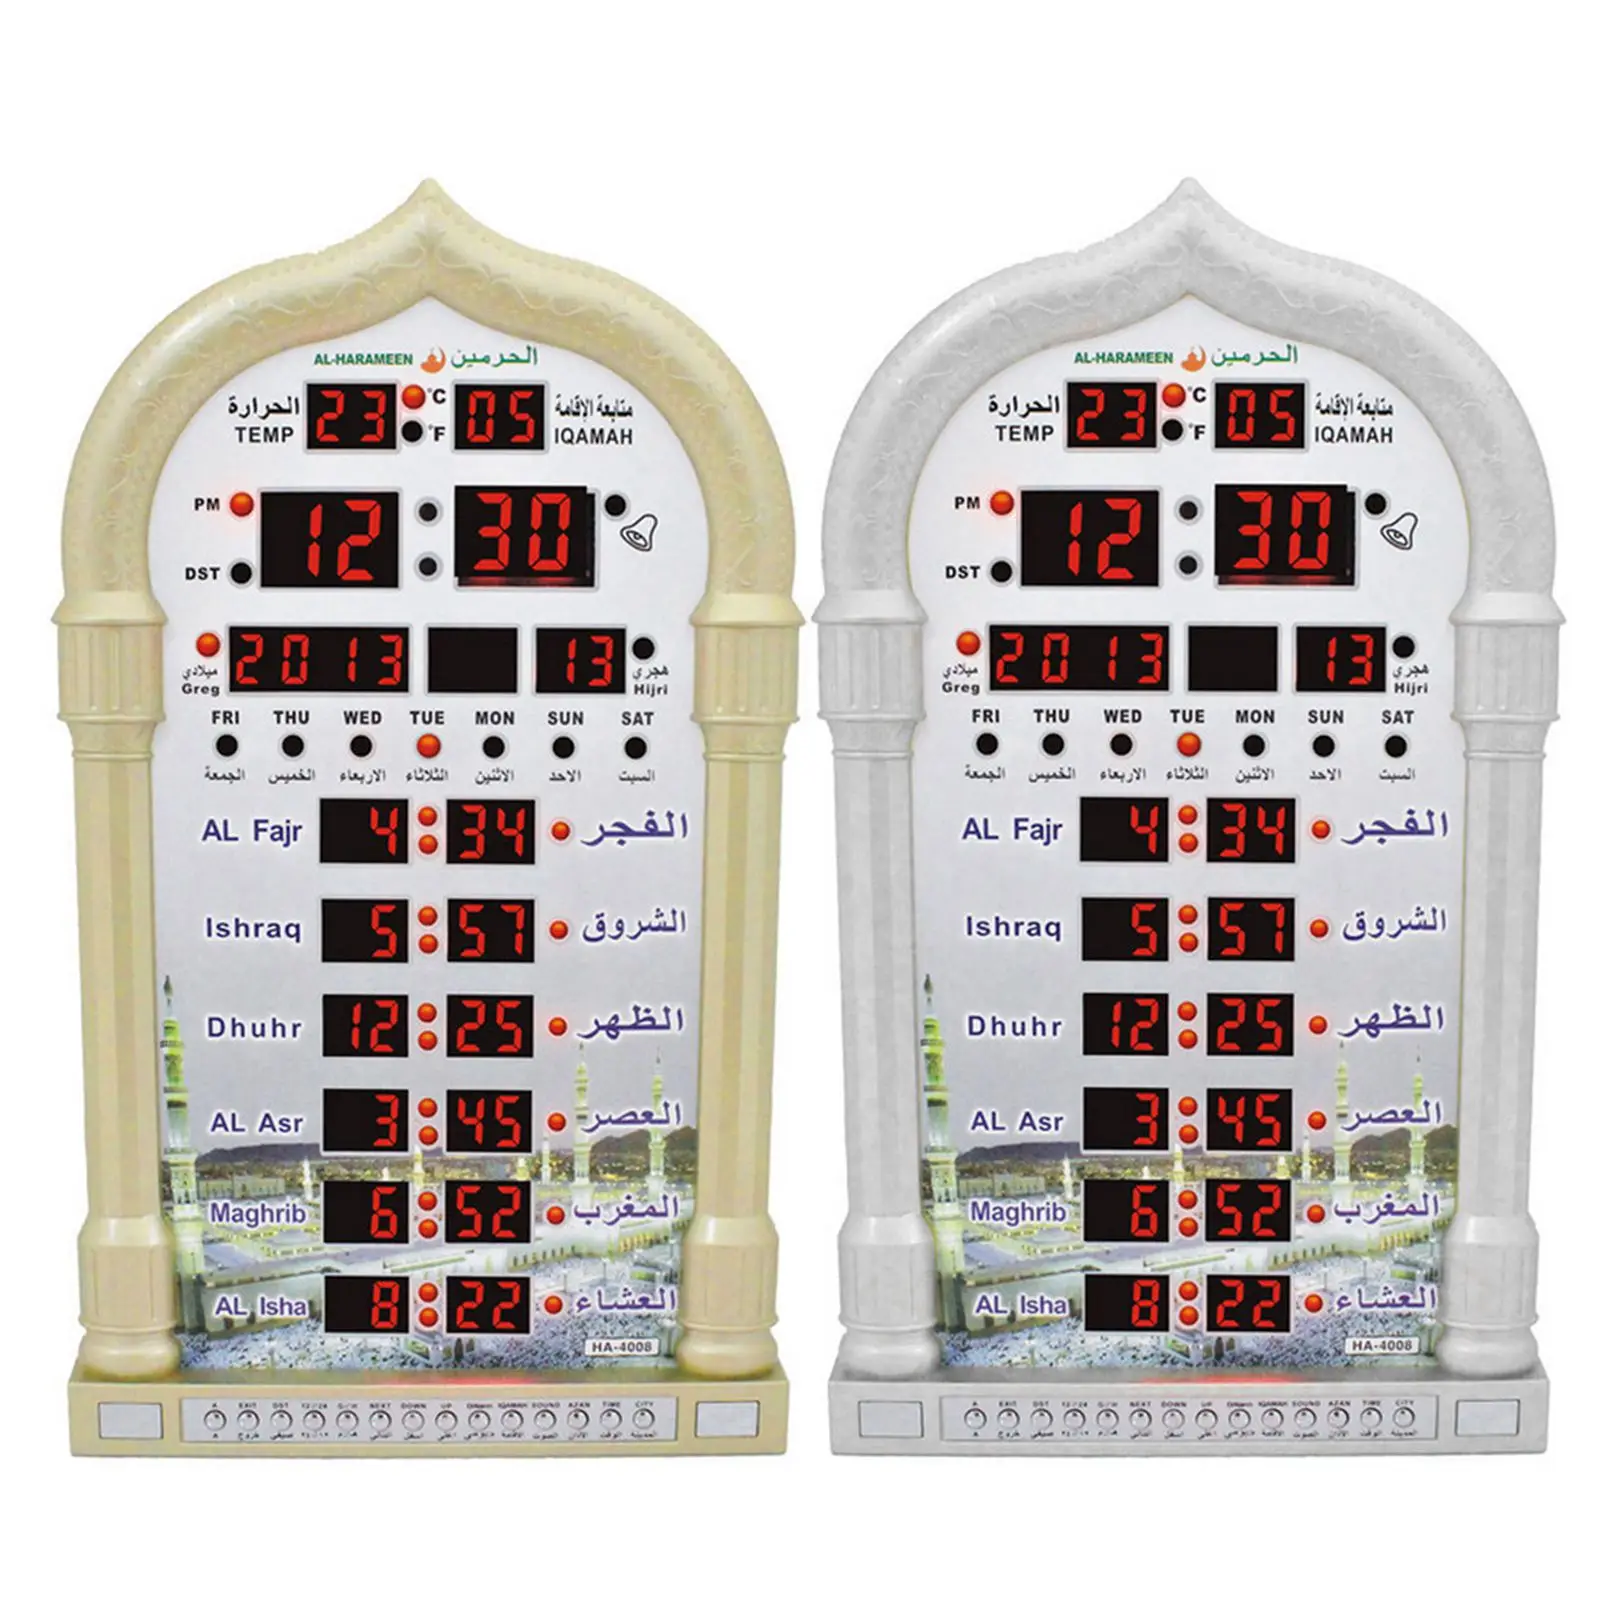 

Plastic 110-240V Wall Calendar Mosque Digital Islamic Clock Muslim Gift Alarm Azan Prayer EU Plug UK Plug Silver Gold